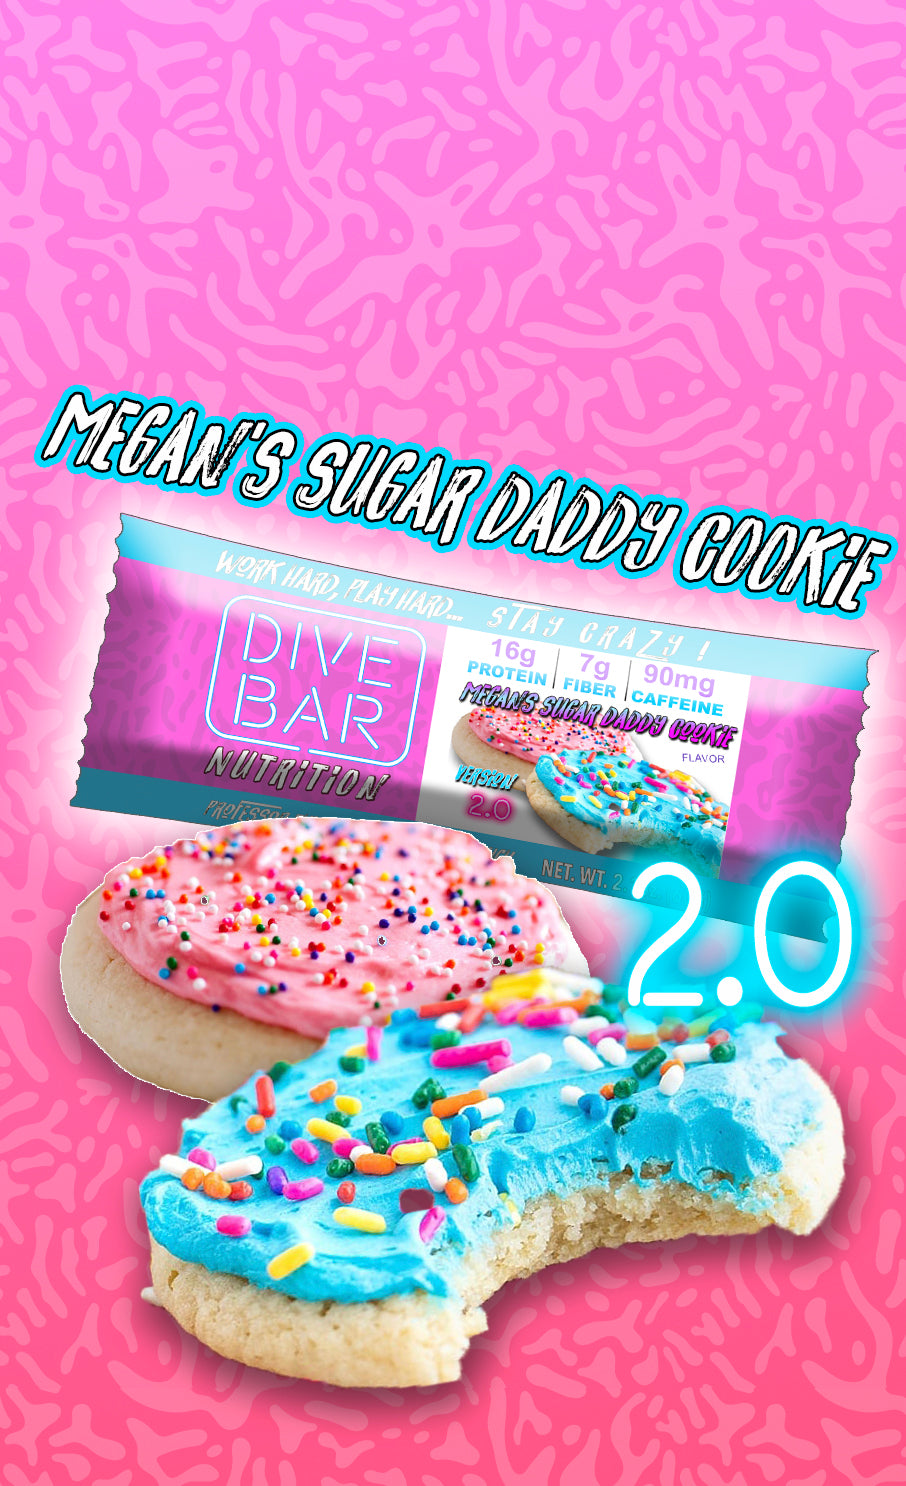 Sugar Daddy Cookie - 6 bars